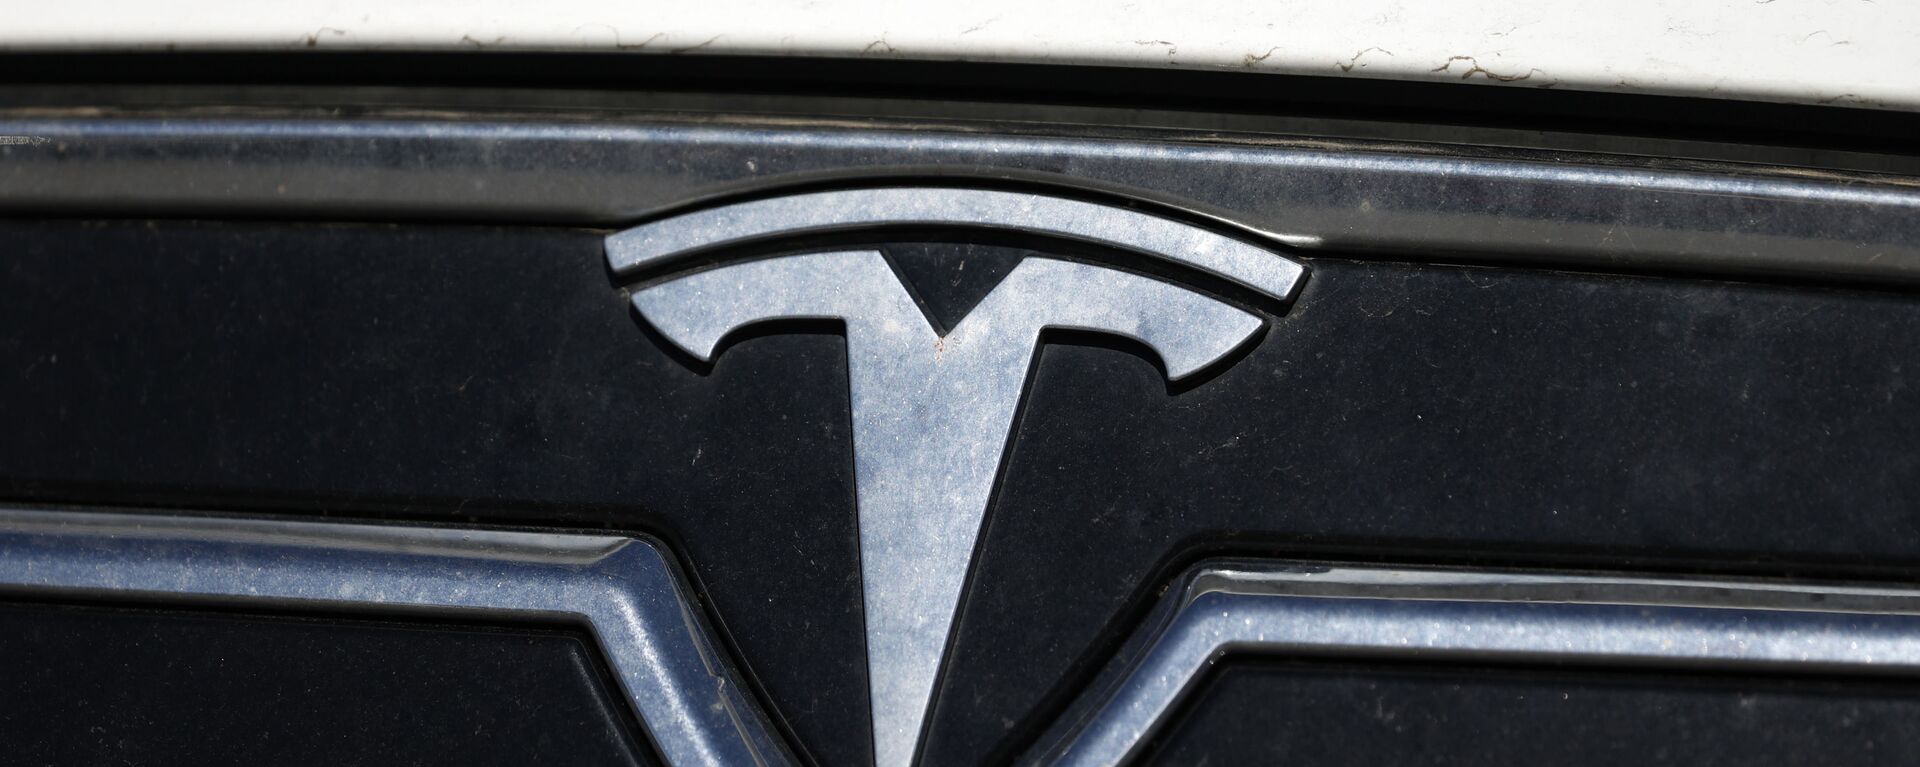 The company logo shines off the grille of an unsold 2020 Model S sedan at a Tesla dealership Sunday, July 19, 2020, in Littleton, Colorado. - Sputnik International, 1920, 02.07.2021